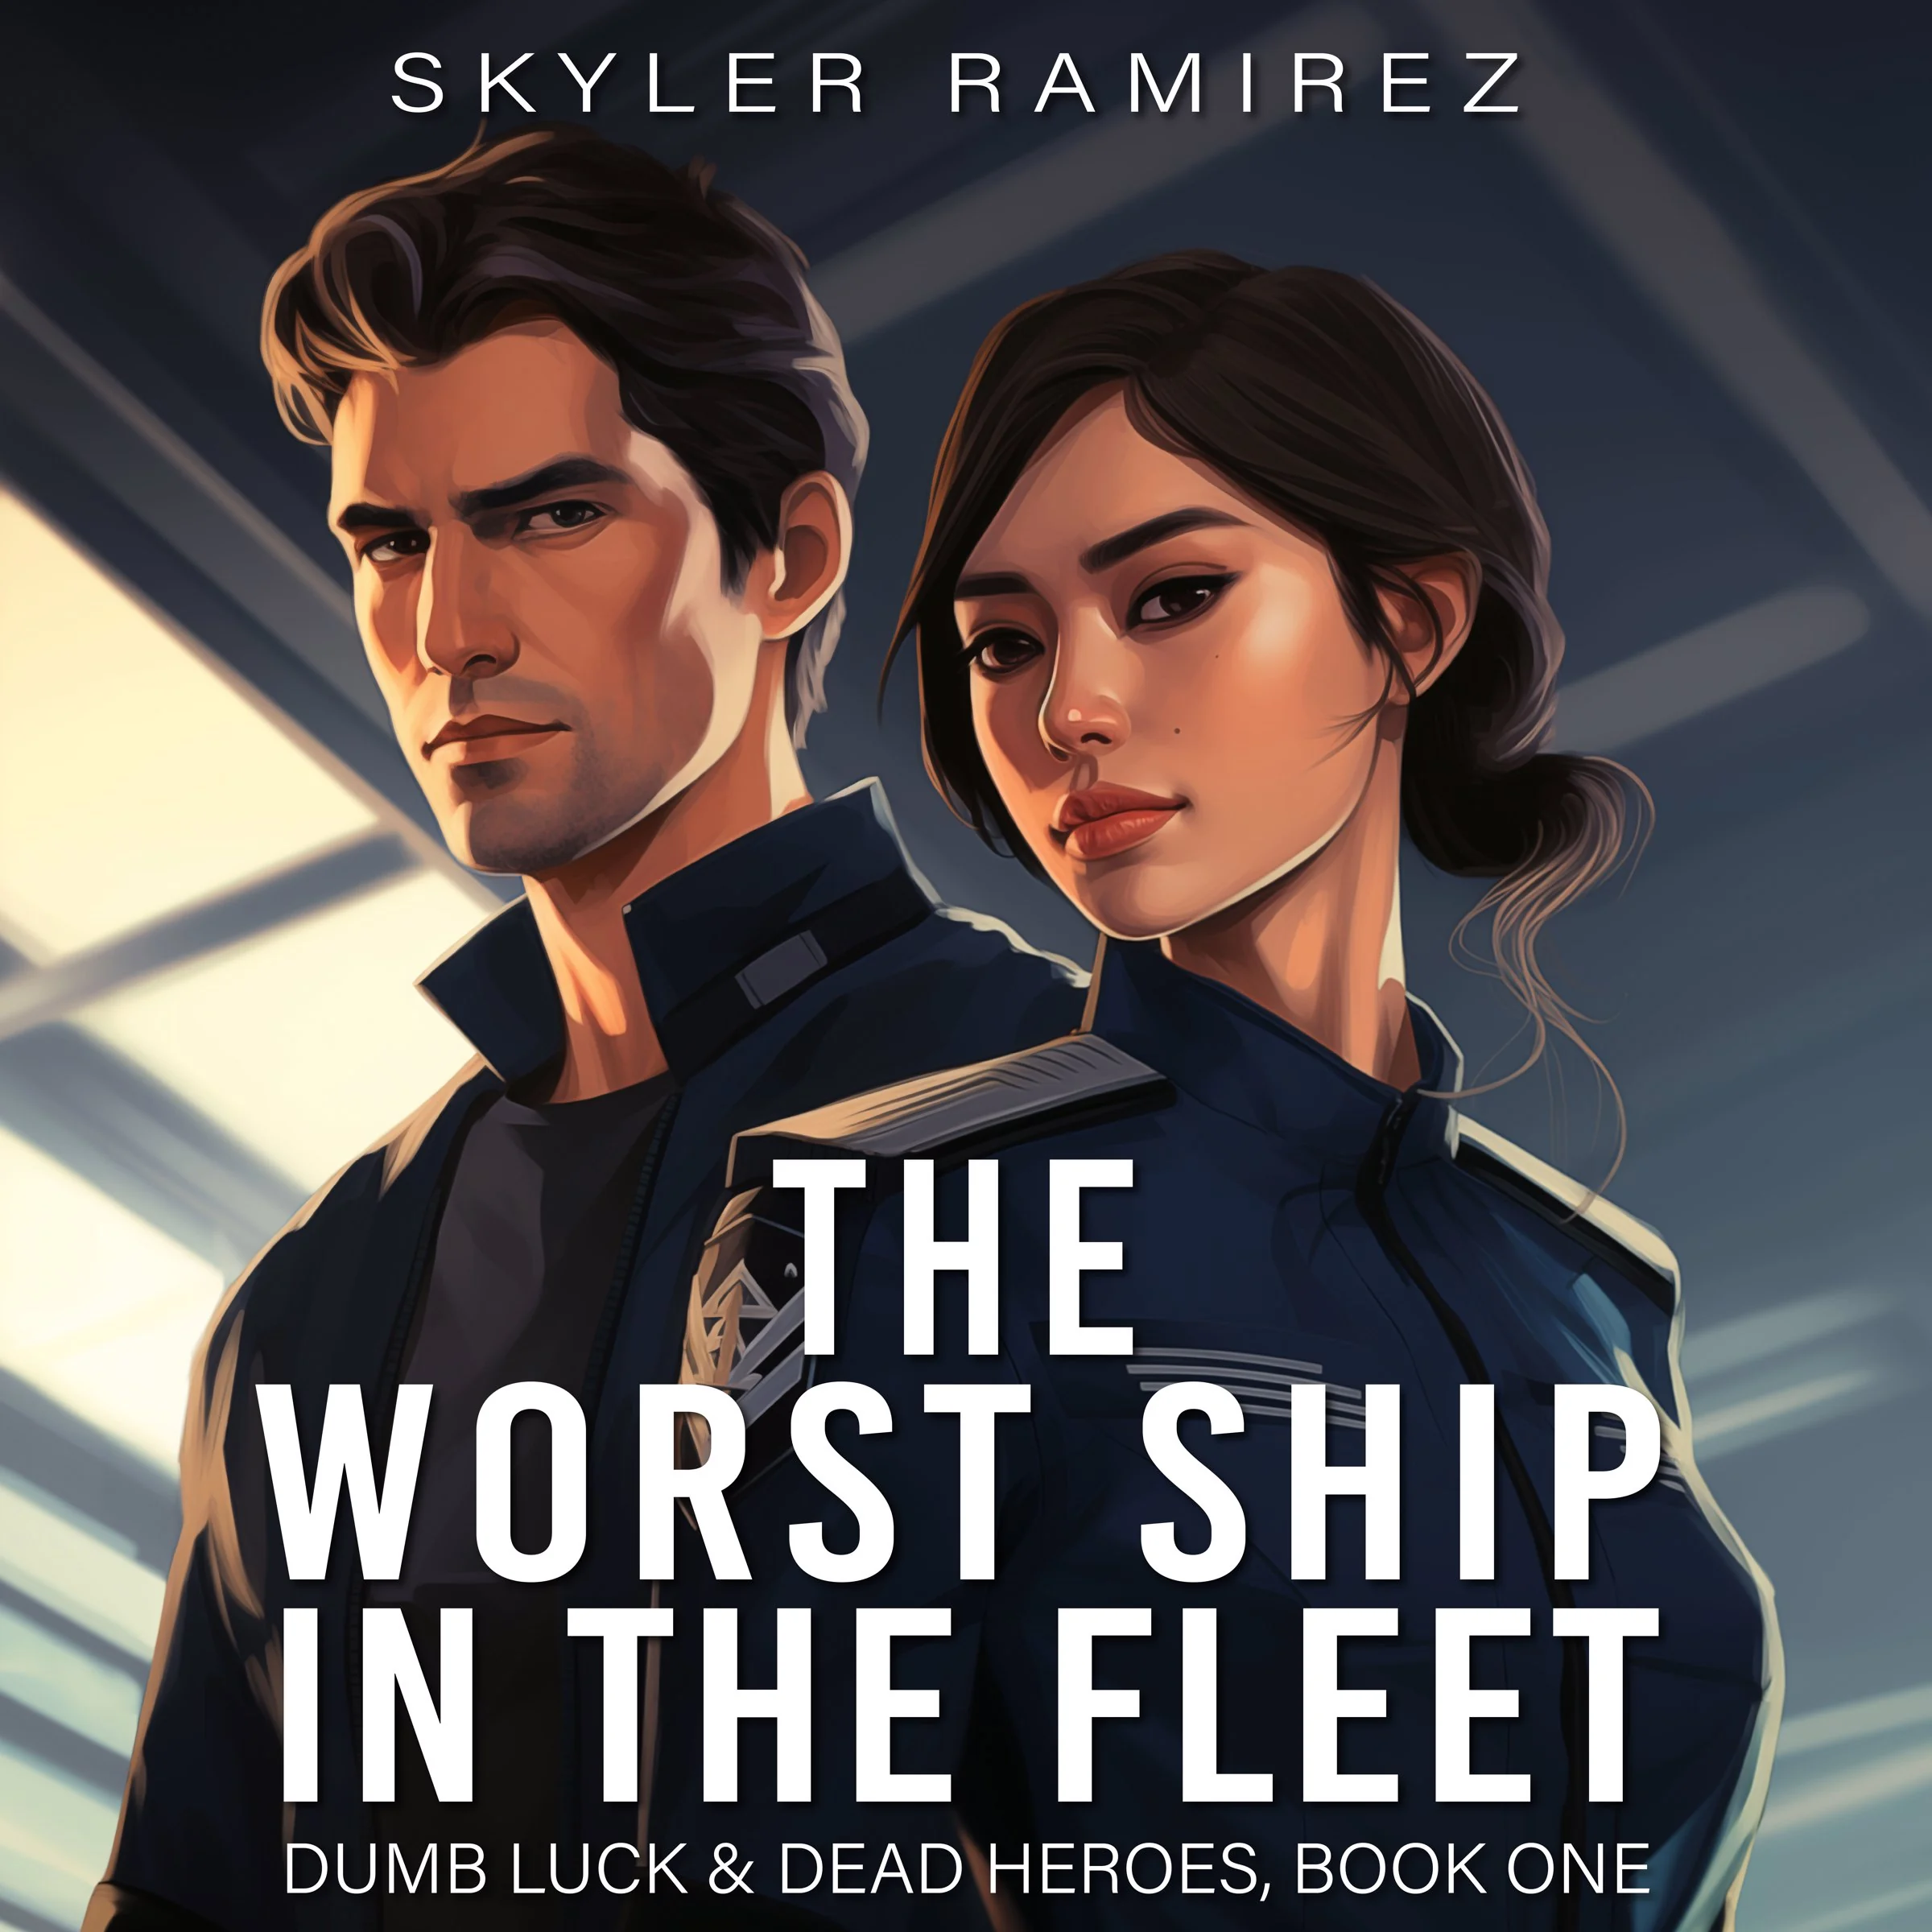 The Worst Ship in the Fleet Audiobook by Skyler Ramirez